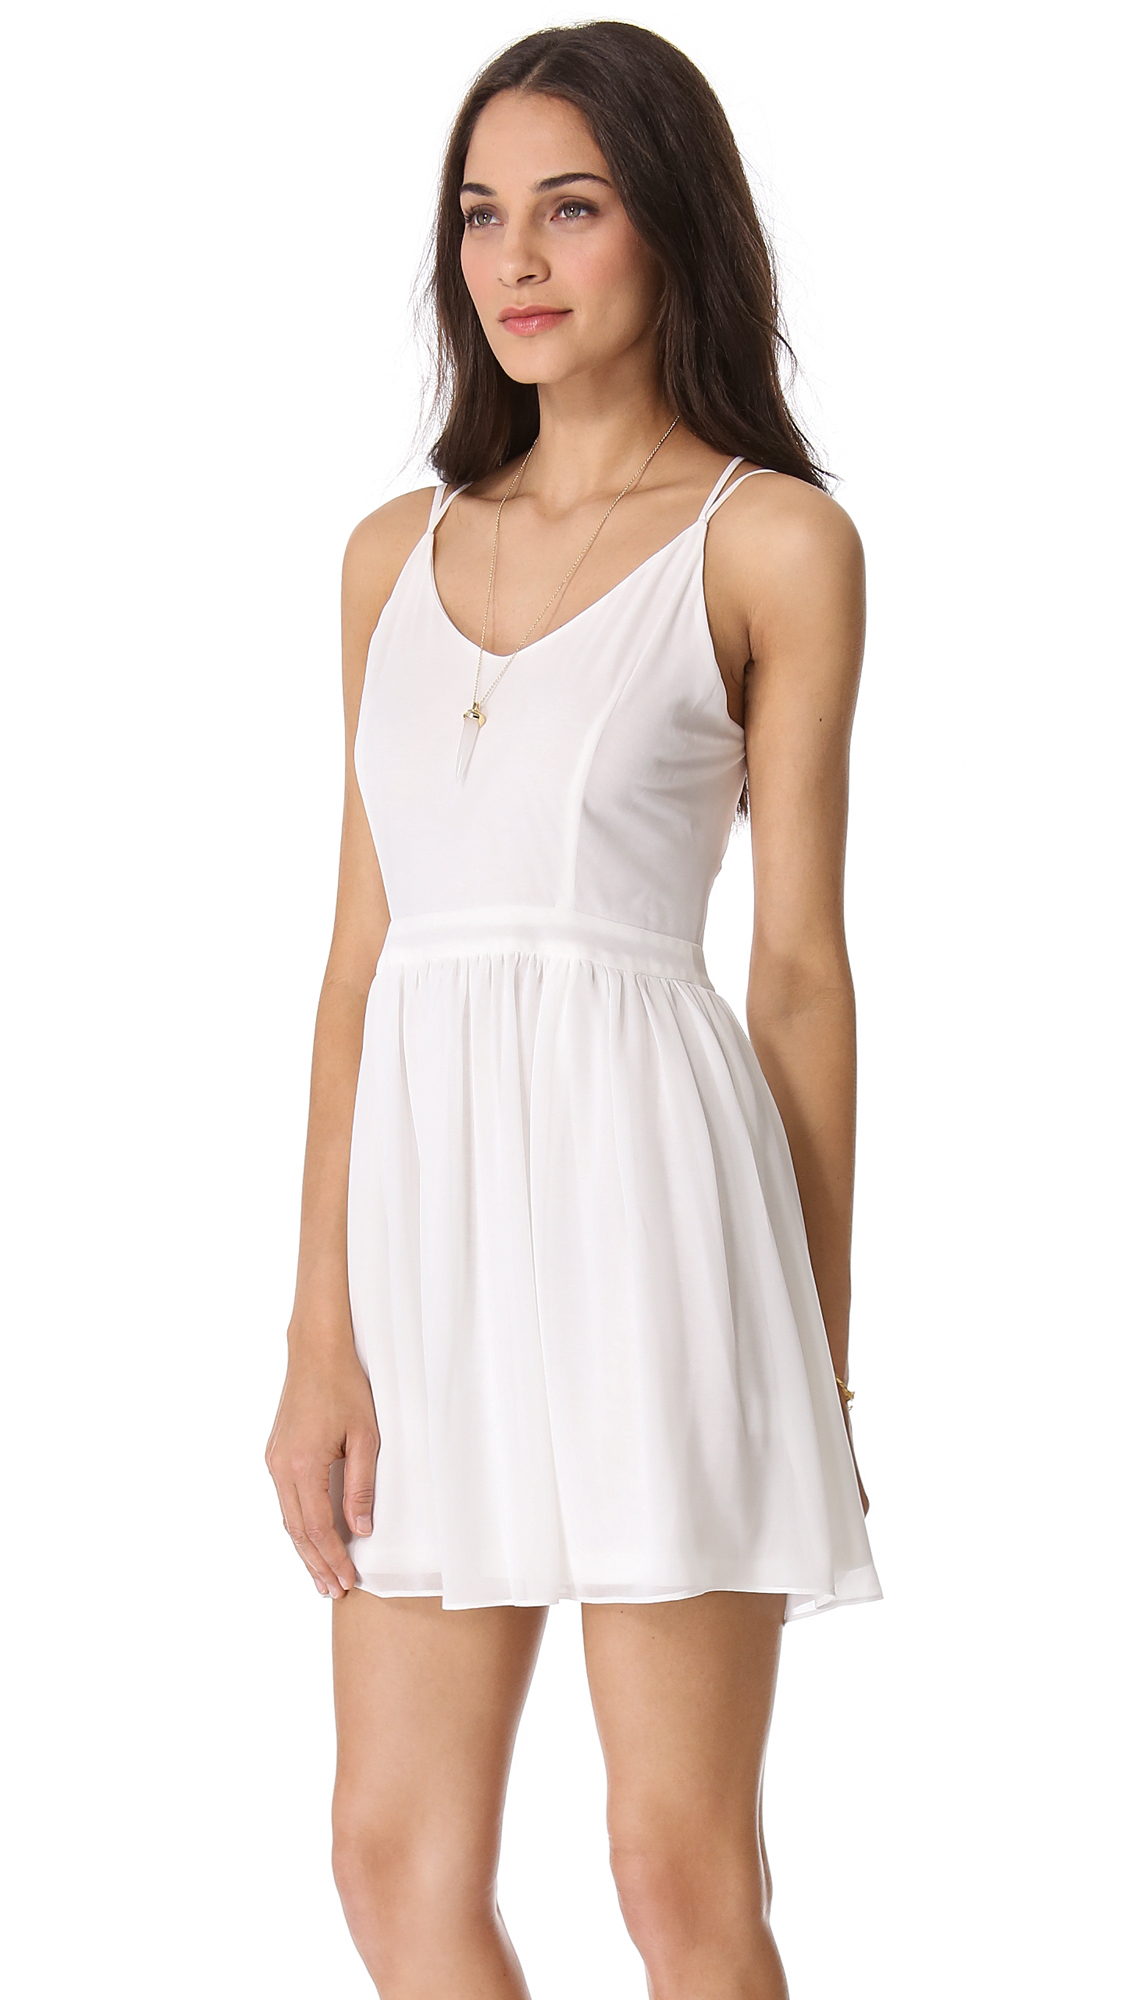 Lyst - Dolce Vita Hanni Sleeveless Dress in White